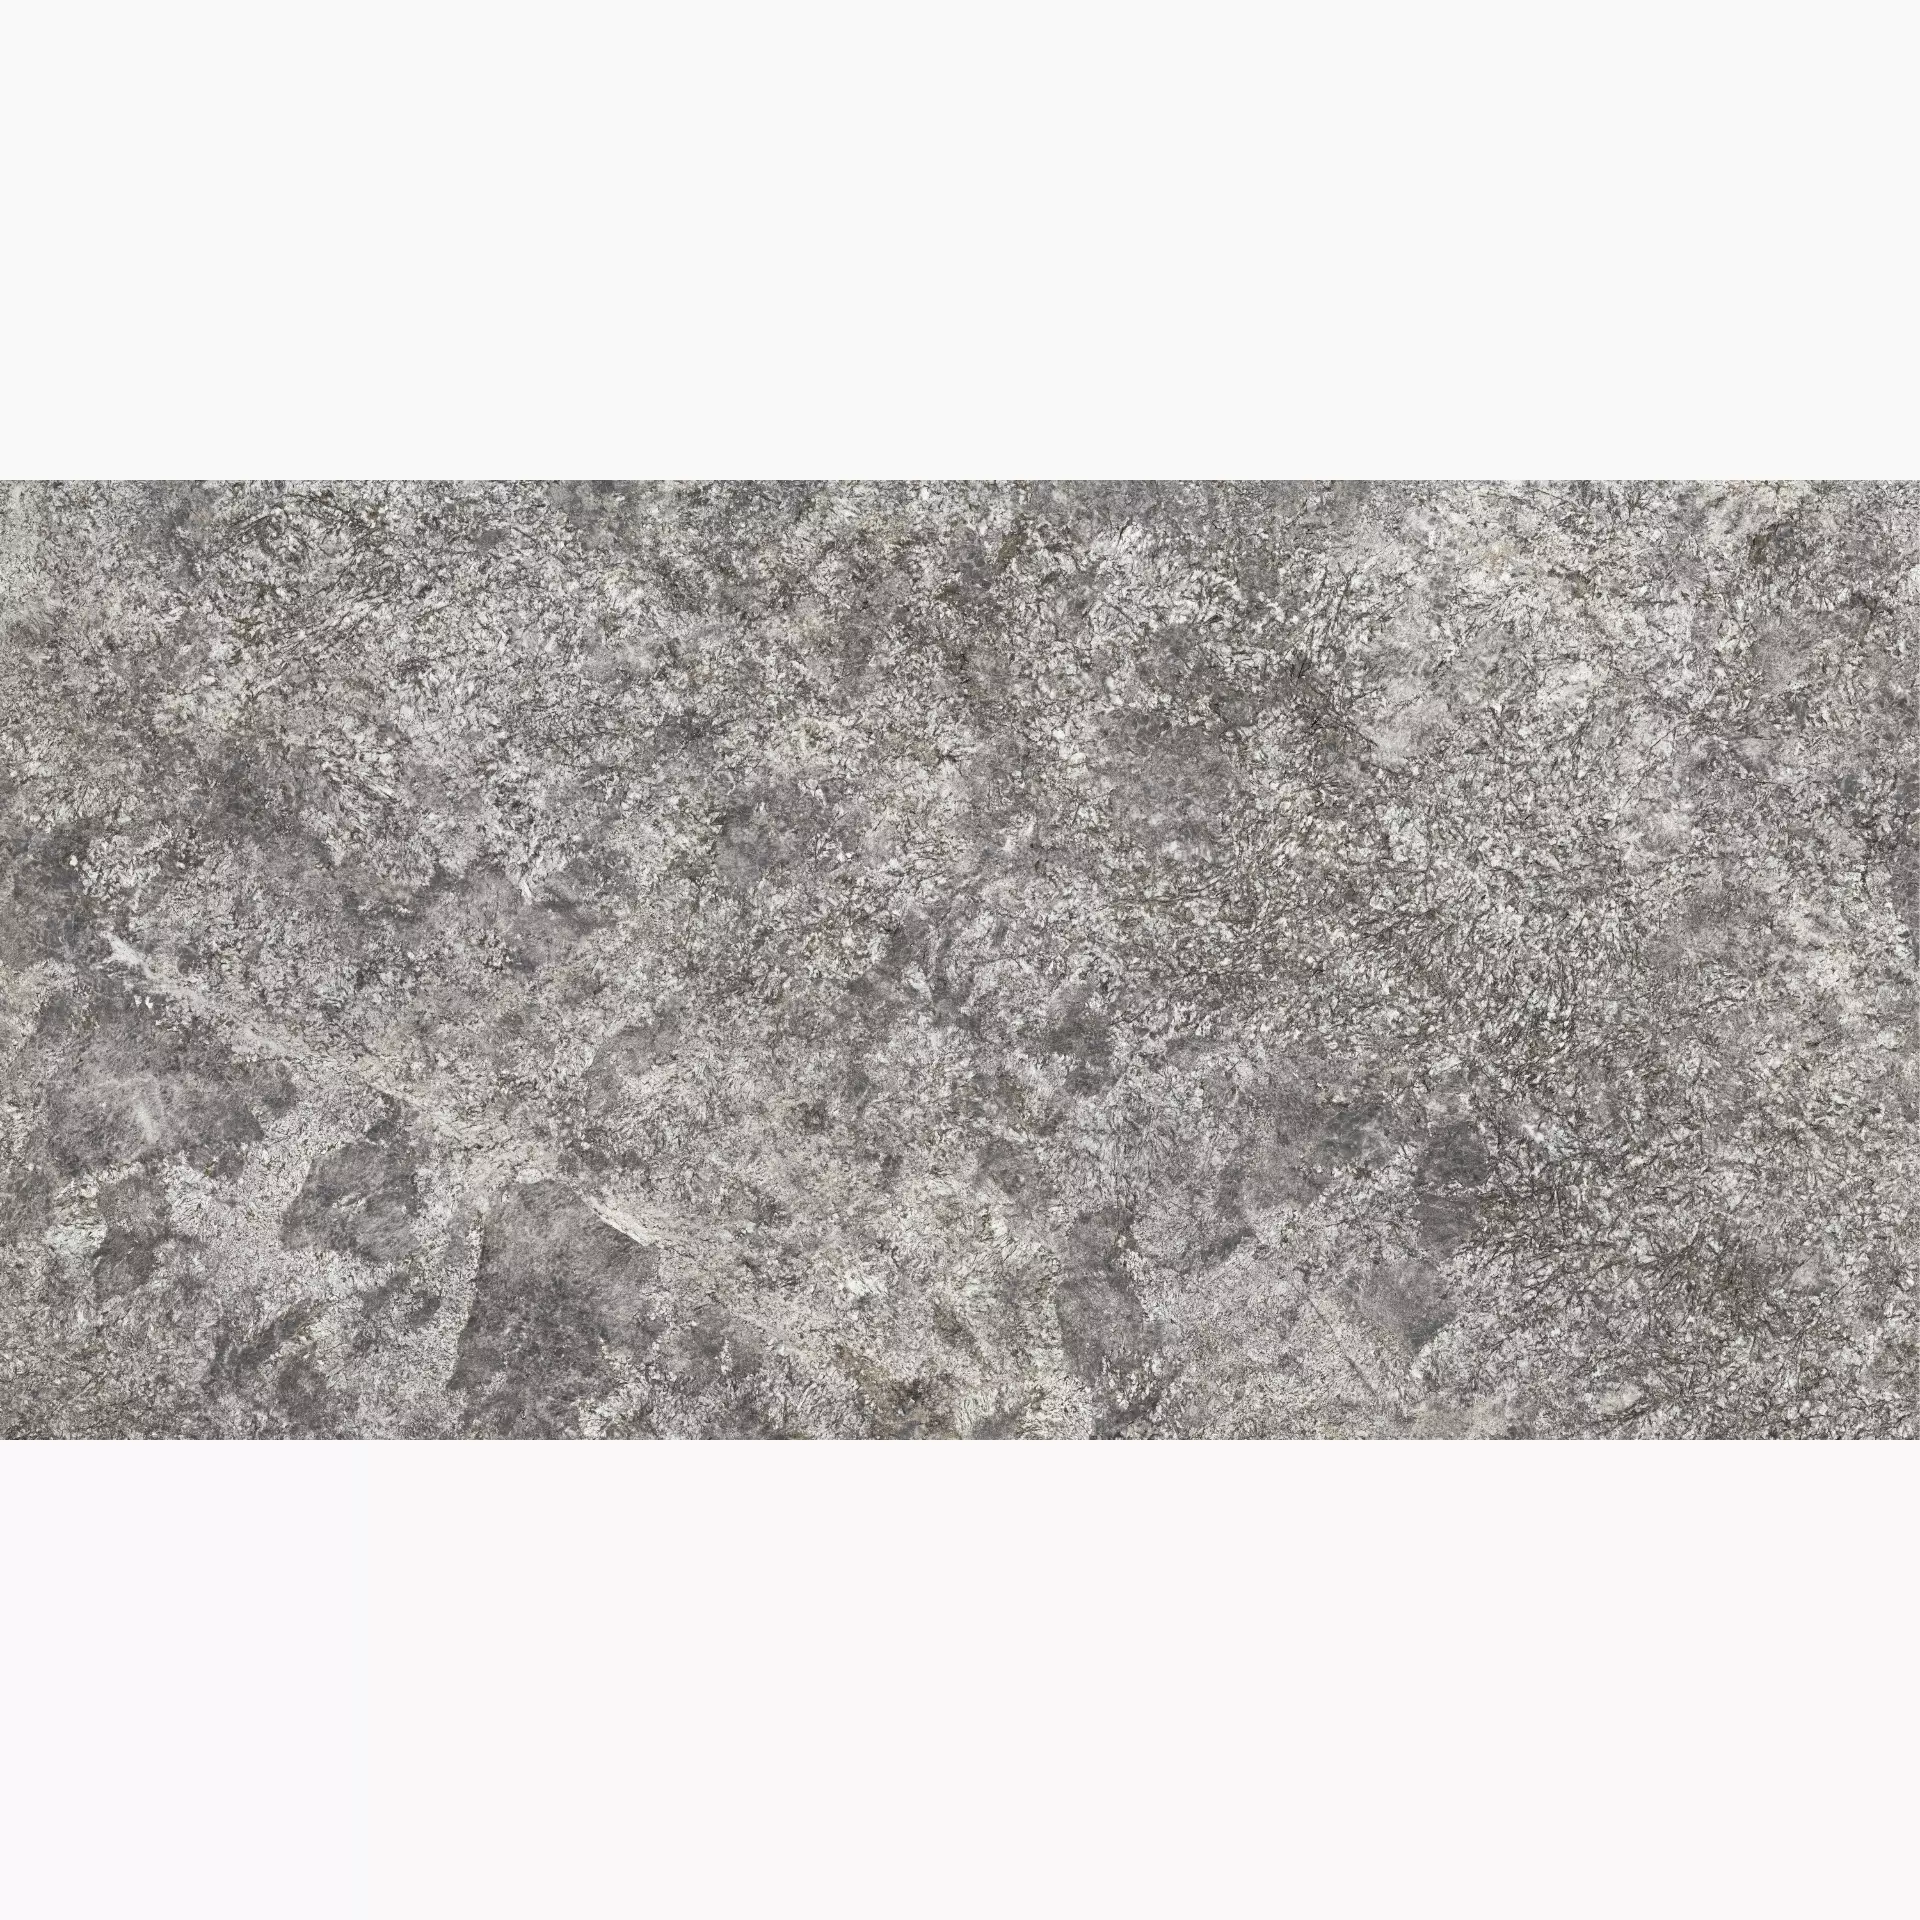 Ariostea Ultra Graniti Celeste Aran Prelucidato UG6LP300686 150x300cm rectified 6mm